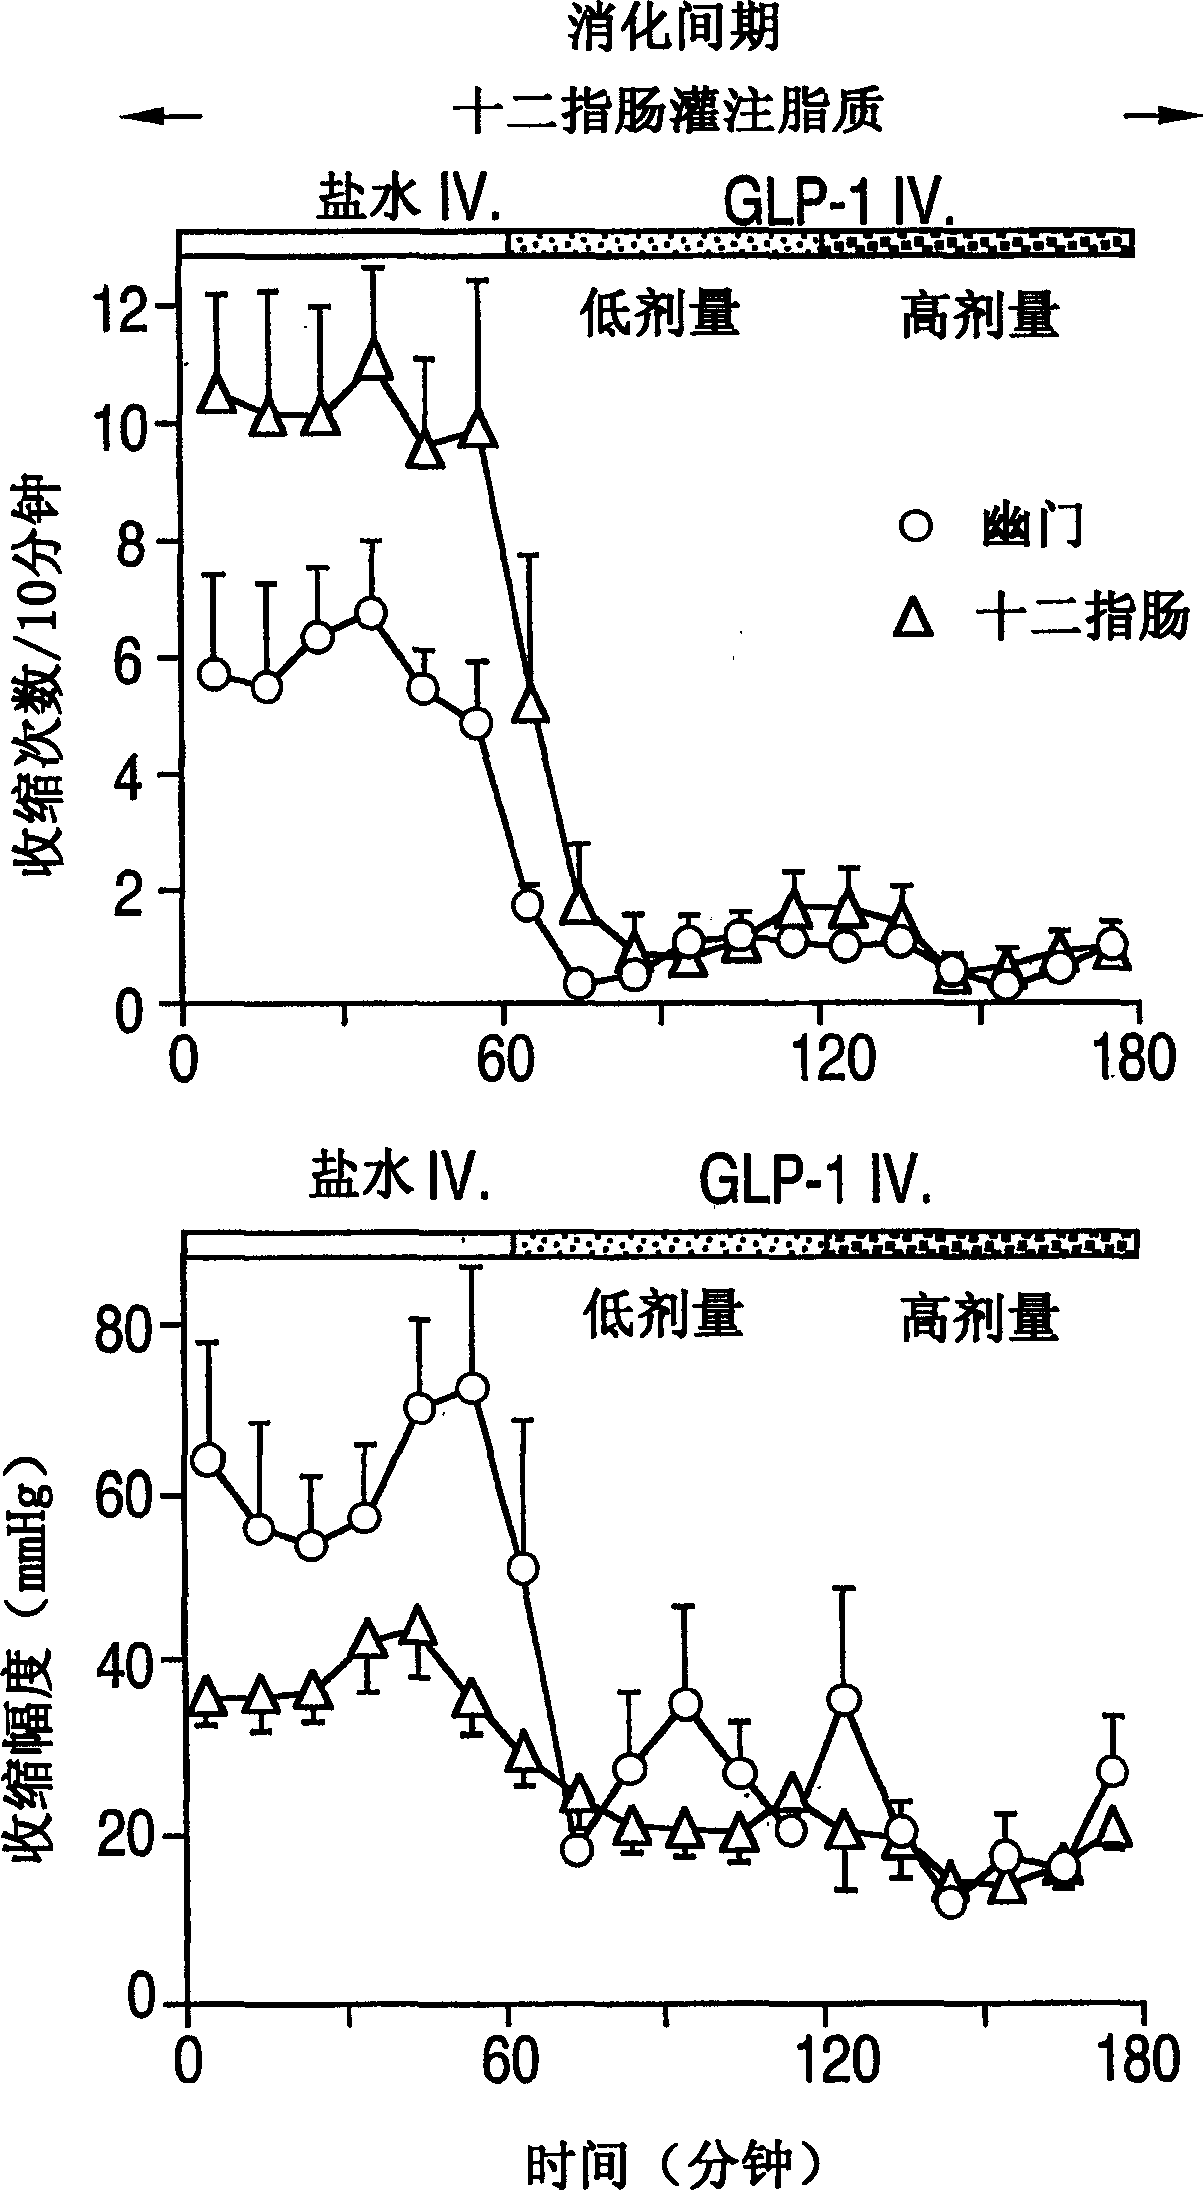 Effects of glucagon-like peptide-1 (7-36) on antro-pyloro-duodenal motility